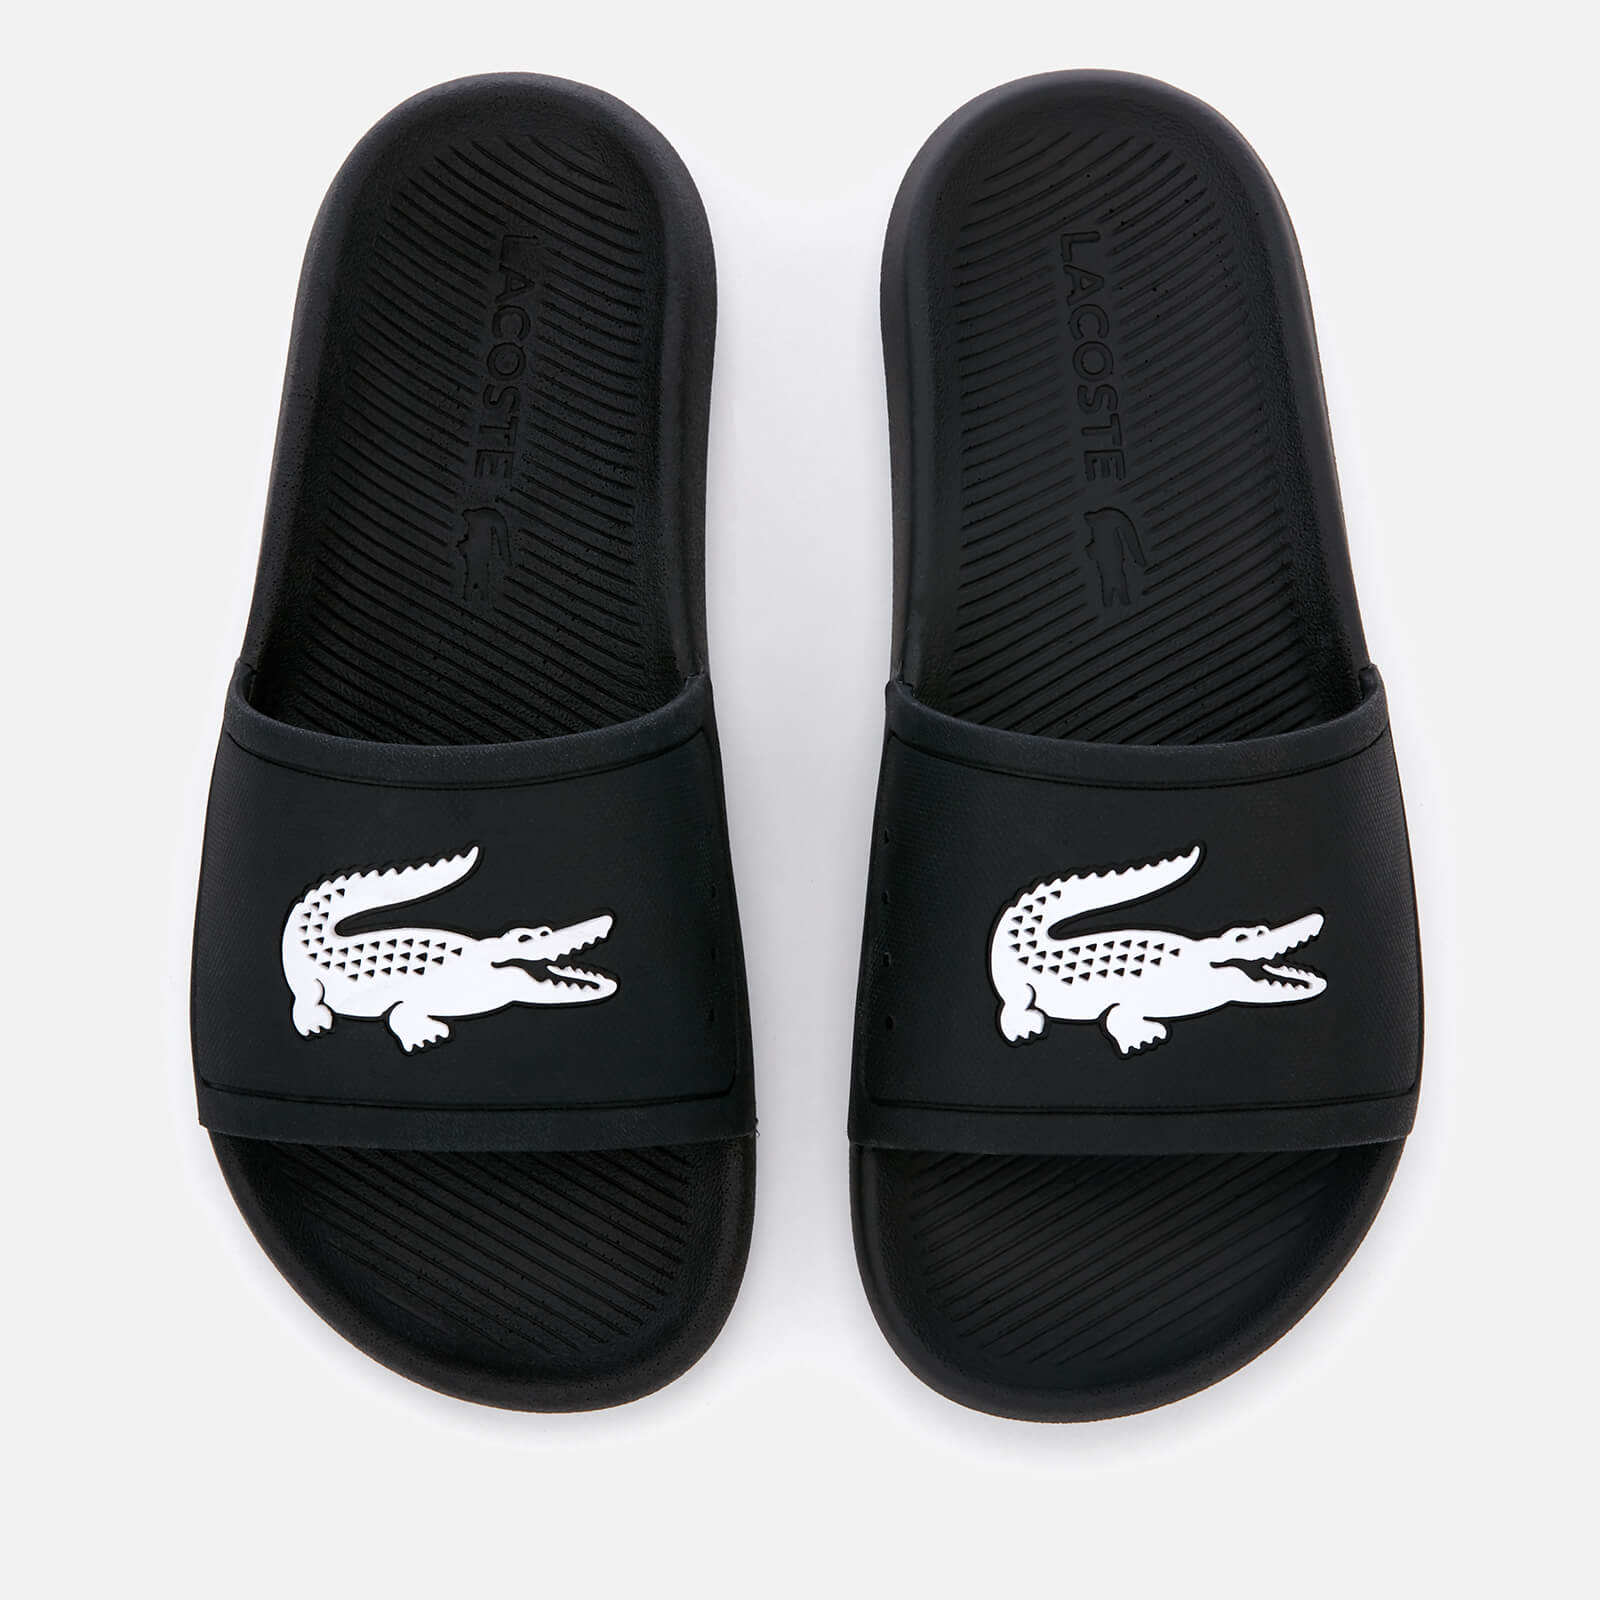 Lacoste Women's Croco Slide 119 3 Sandals - Black/White - UK 6 - Black/White